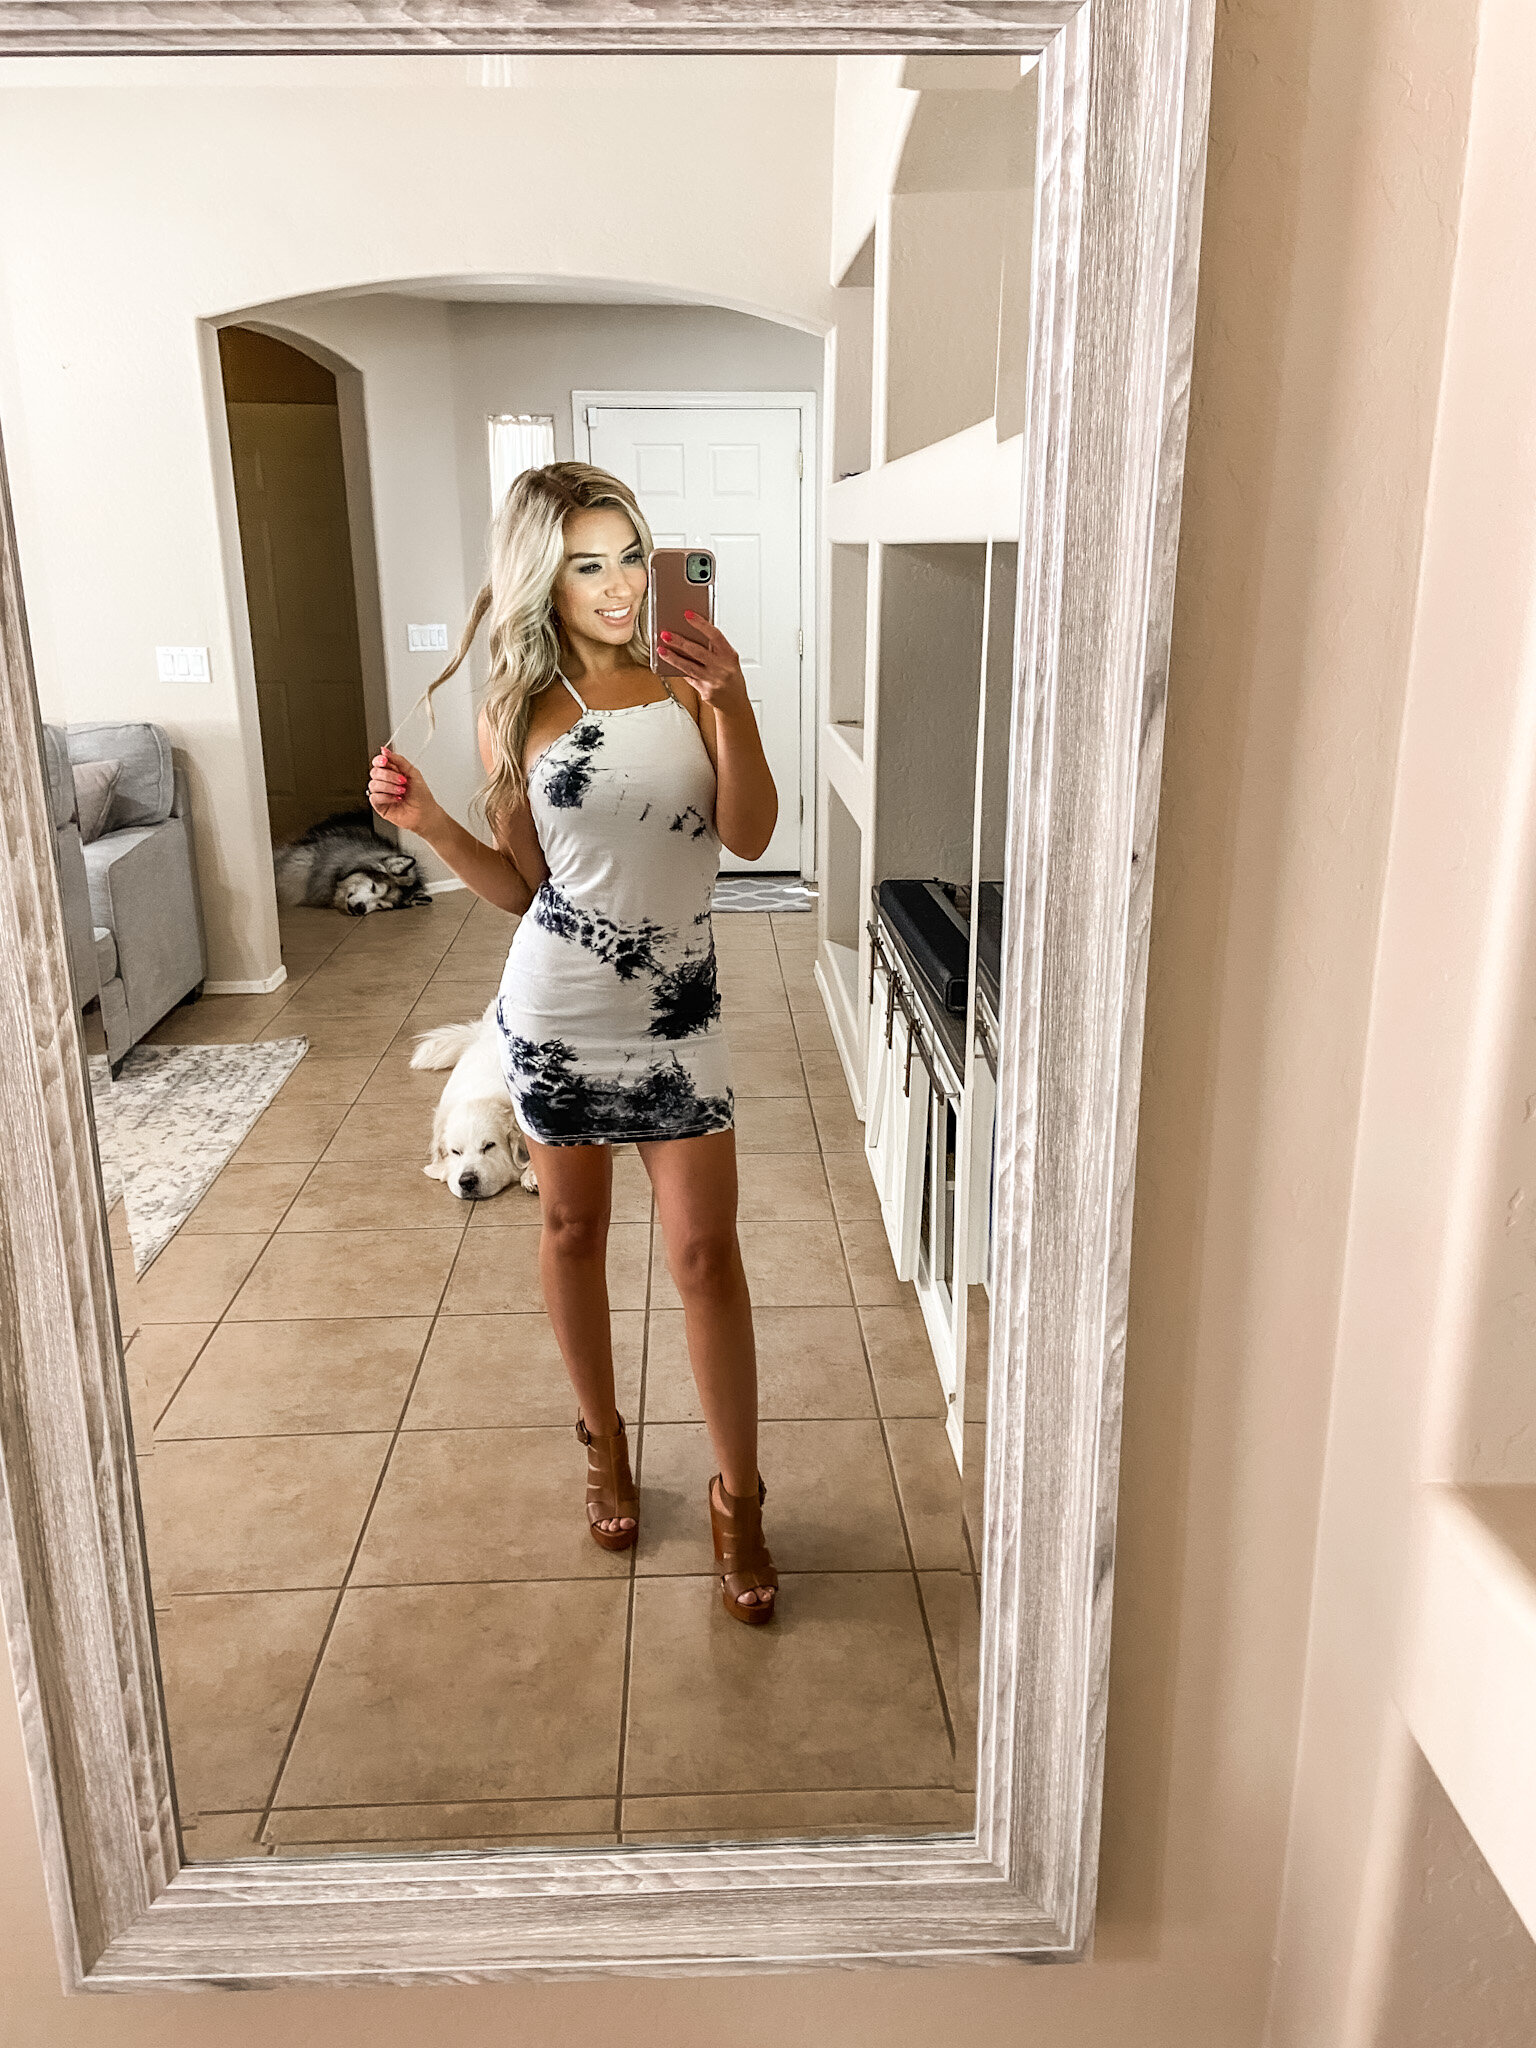 Zaful Summer Clothing Haul — Chelsey Brooke Fitness